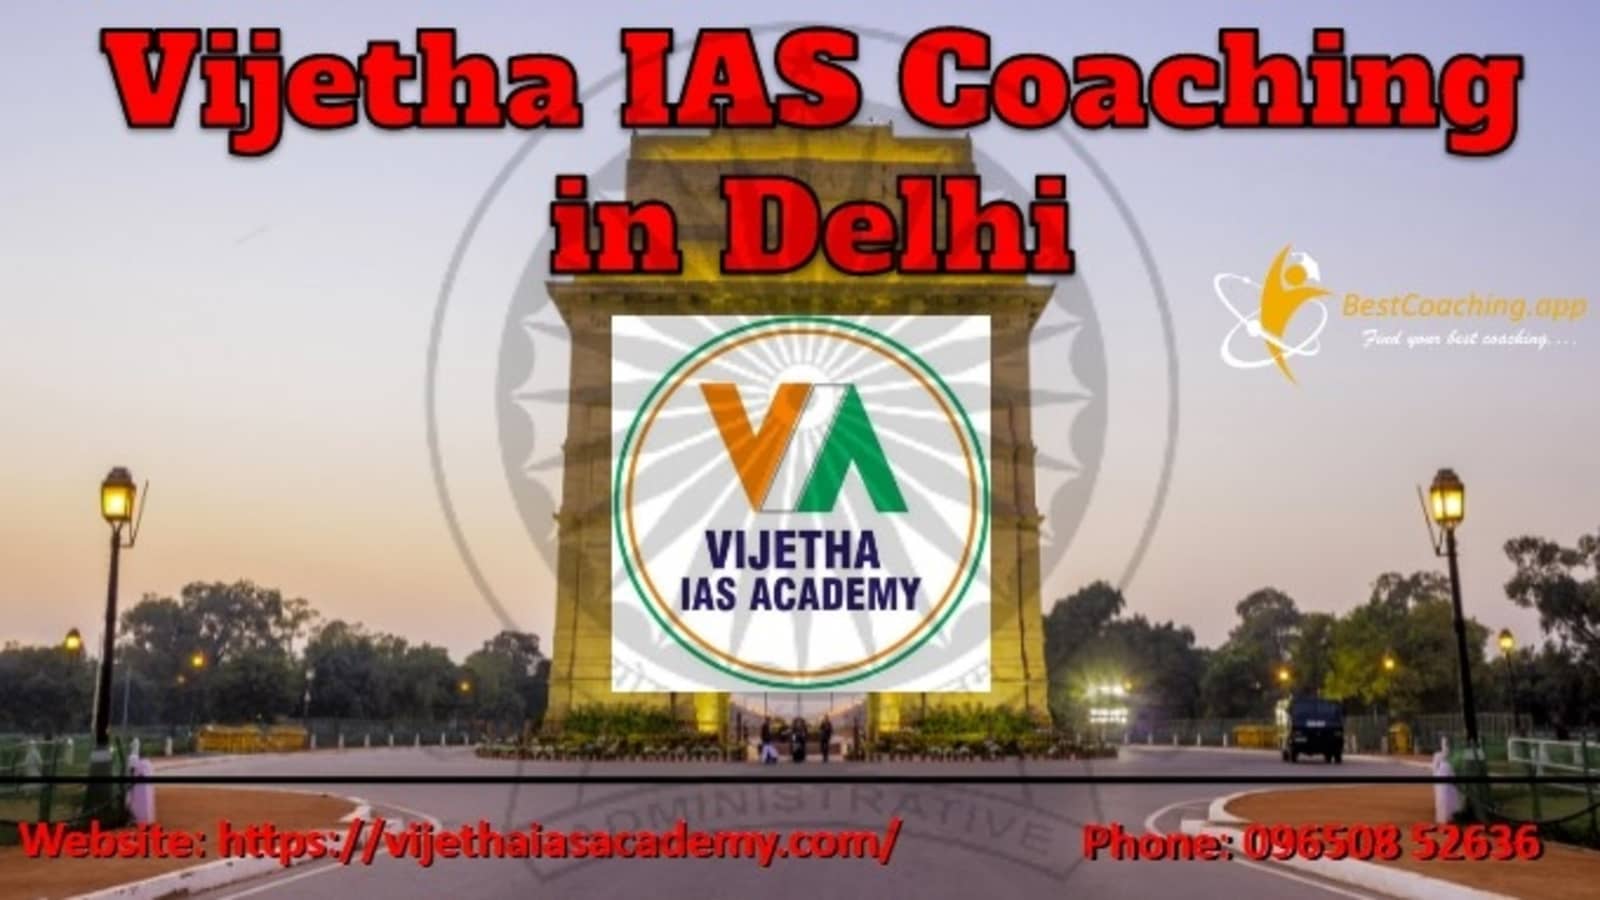 Vijetha IAS Coaching in Delhi